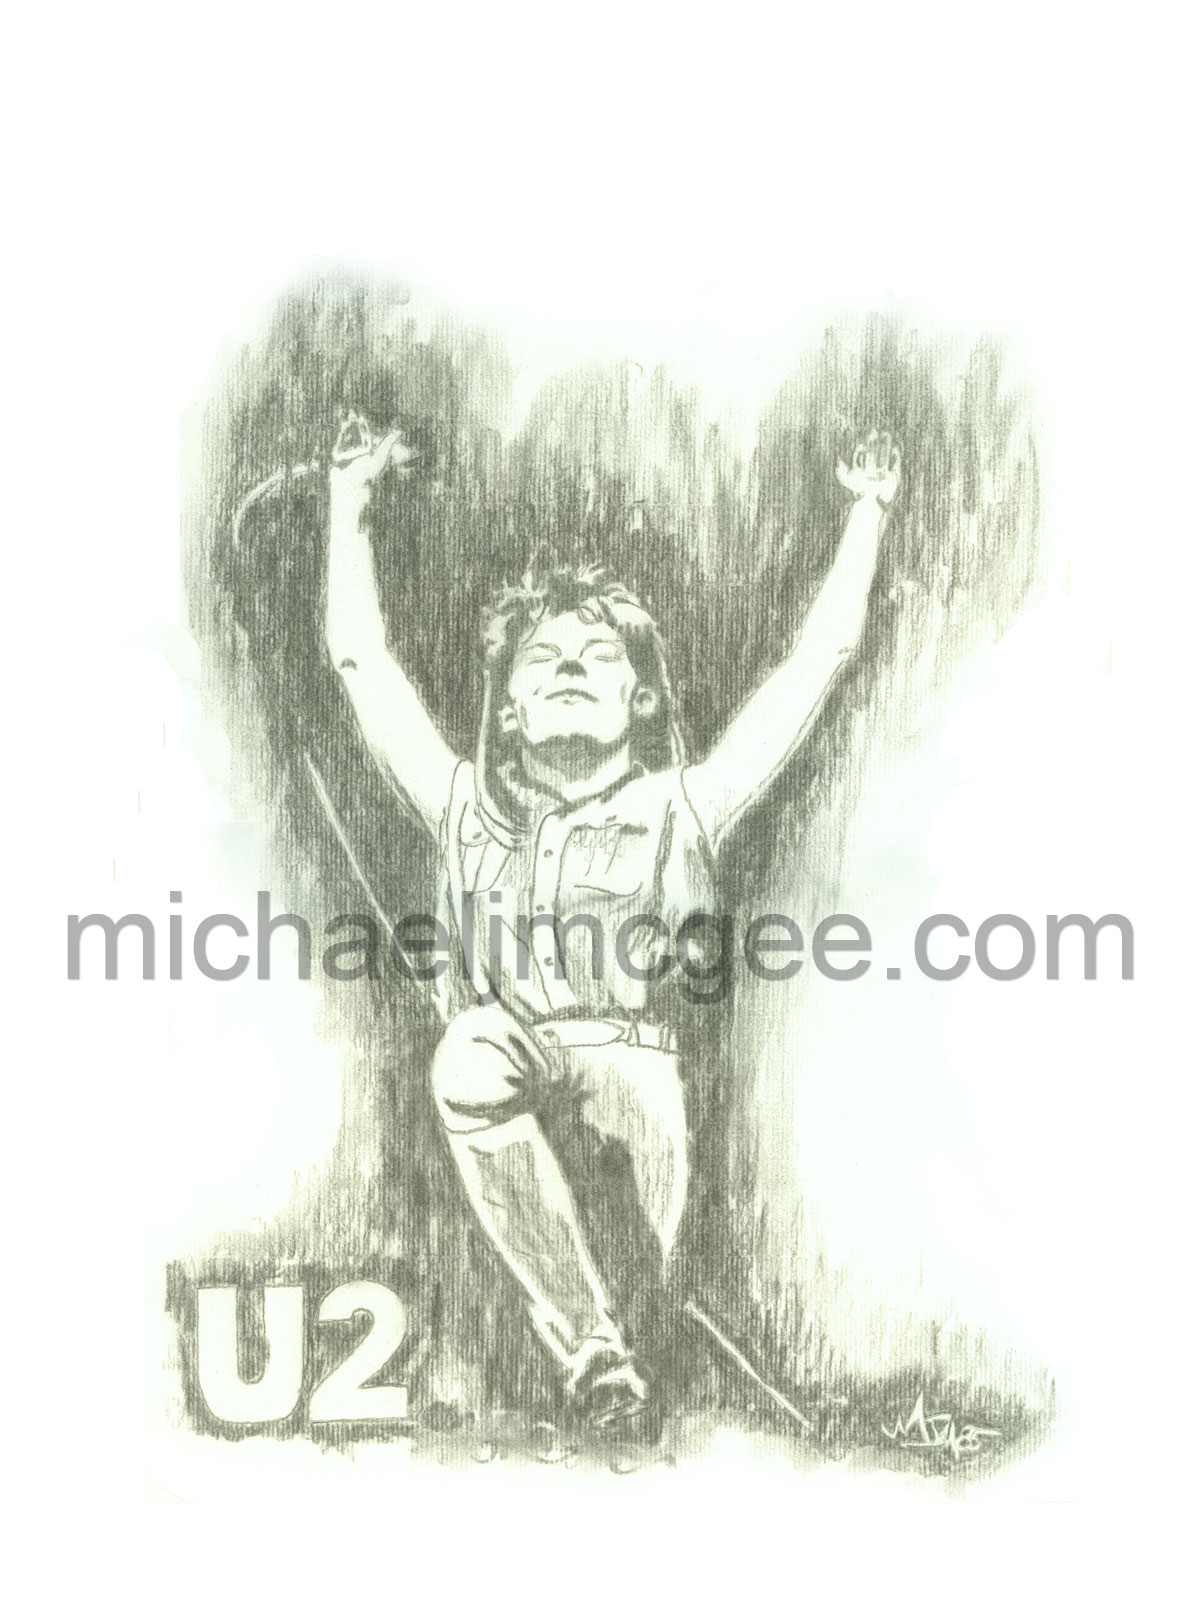 U2-Bono / MJM Artworks / michaeljmcgee.com